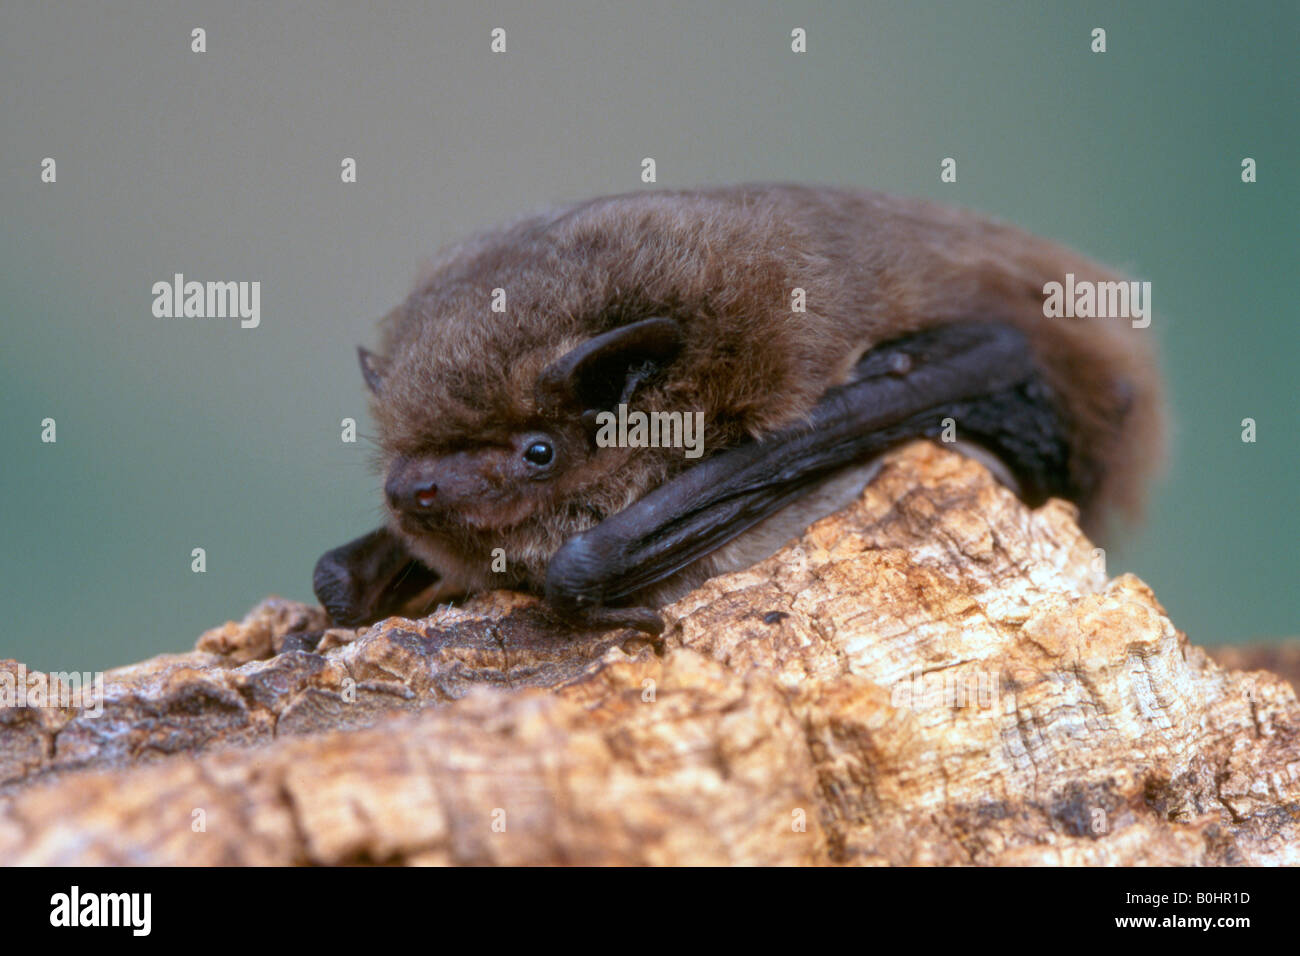 Common Pipistrelle Bat (Pipistrellus pipistrellus) clinging to a piece of wood, Schwaz, Tyrol, Austria, Europe Stock Photo